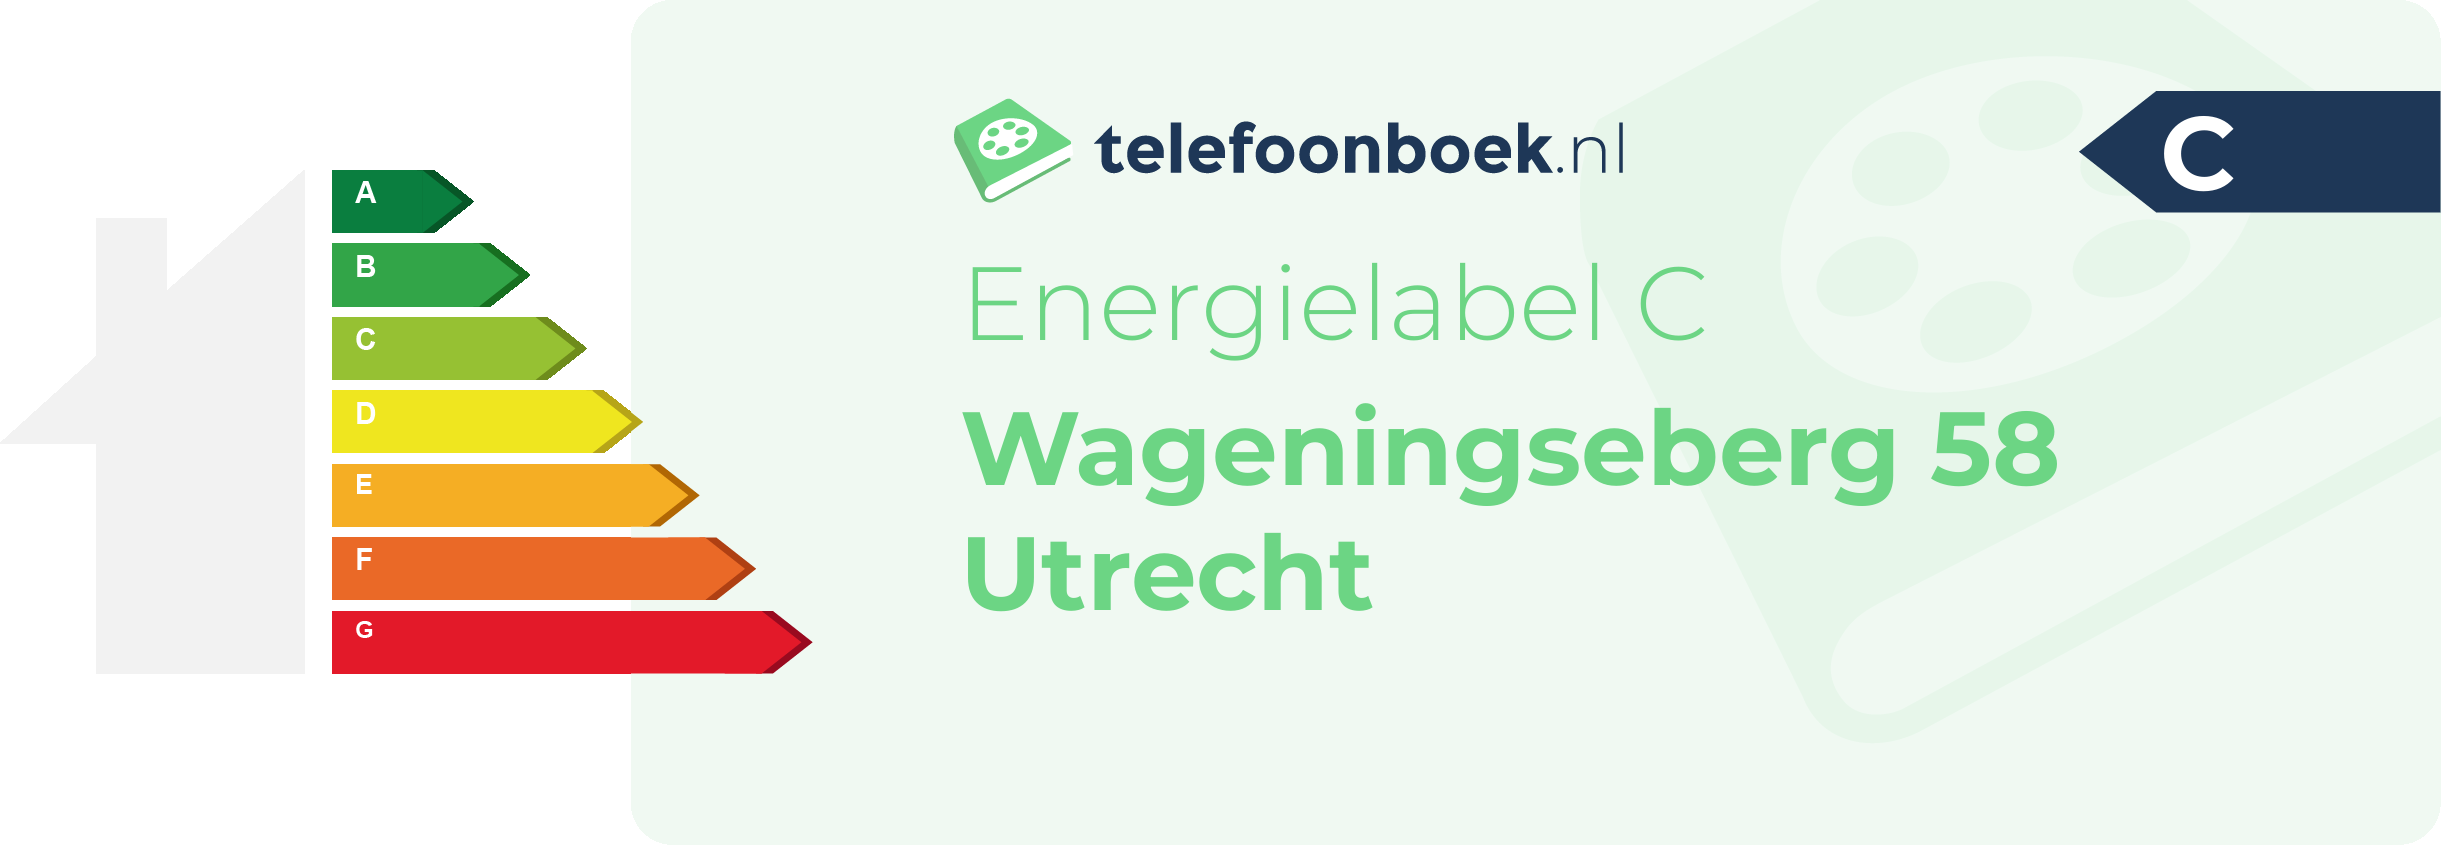 Energielabel Wageningseberg 58 Utrecht